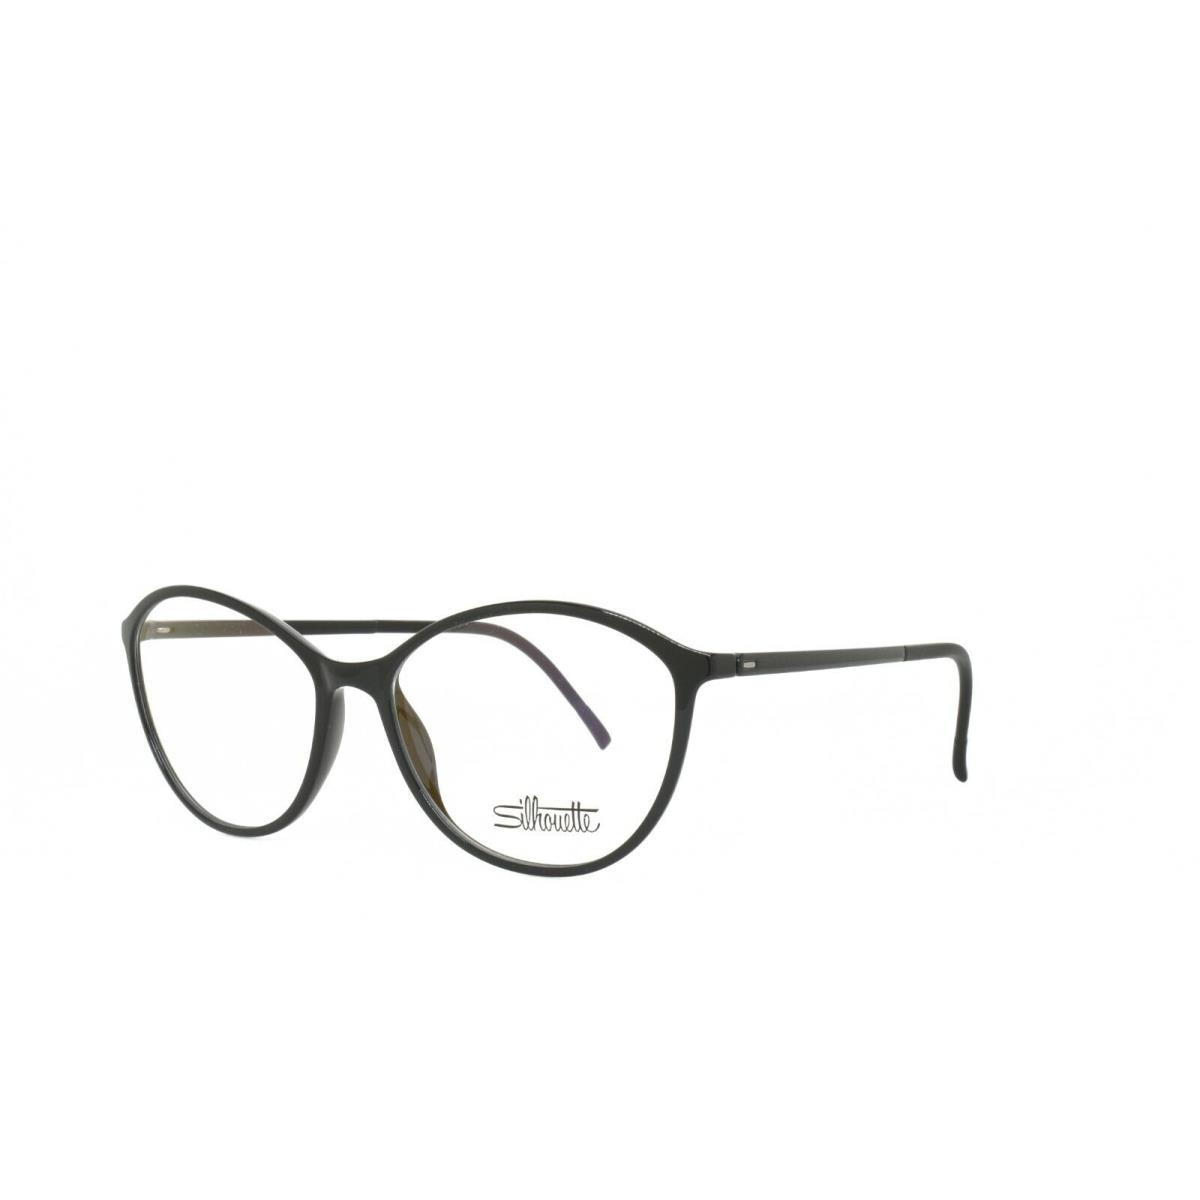 Silhouette Spx Illusion 1584 75 9010 Eyeglasses 54-15-135 Black - Frame: Black